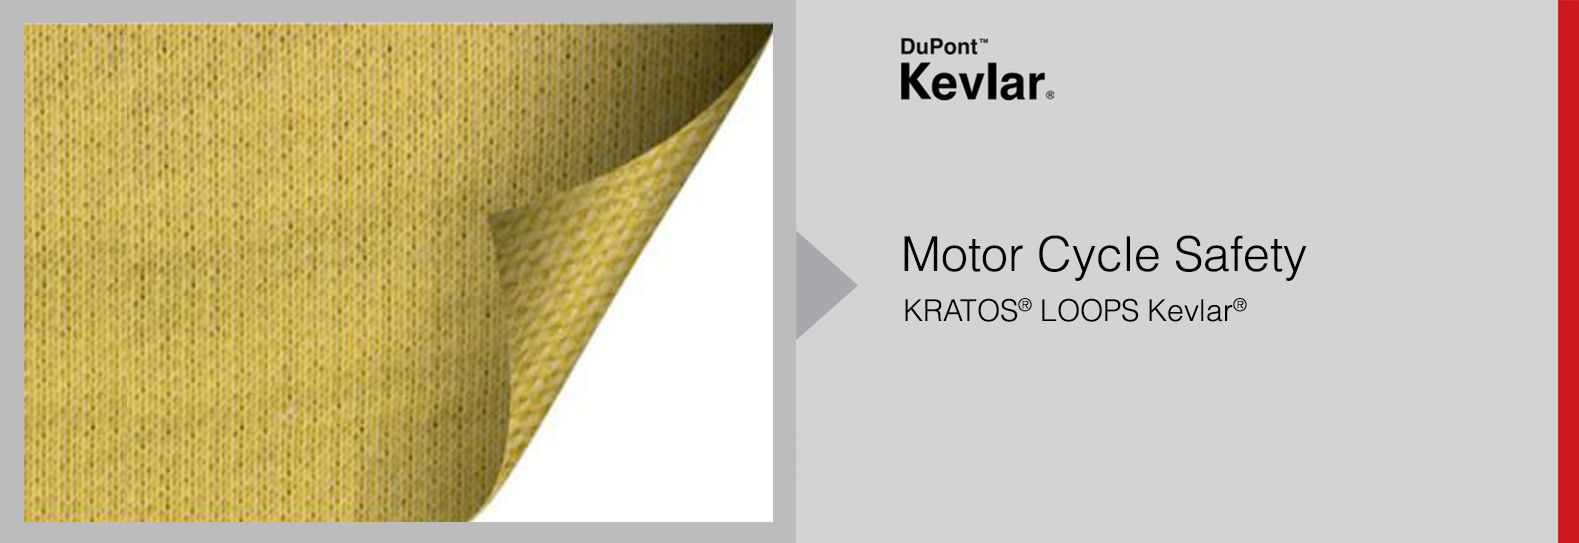 Kevlar®针织面料高强度/技术纺织品